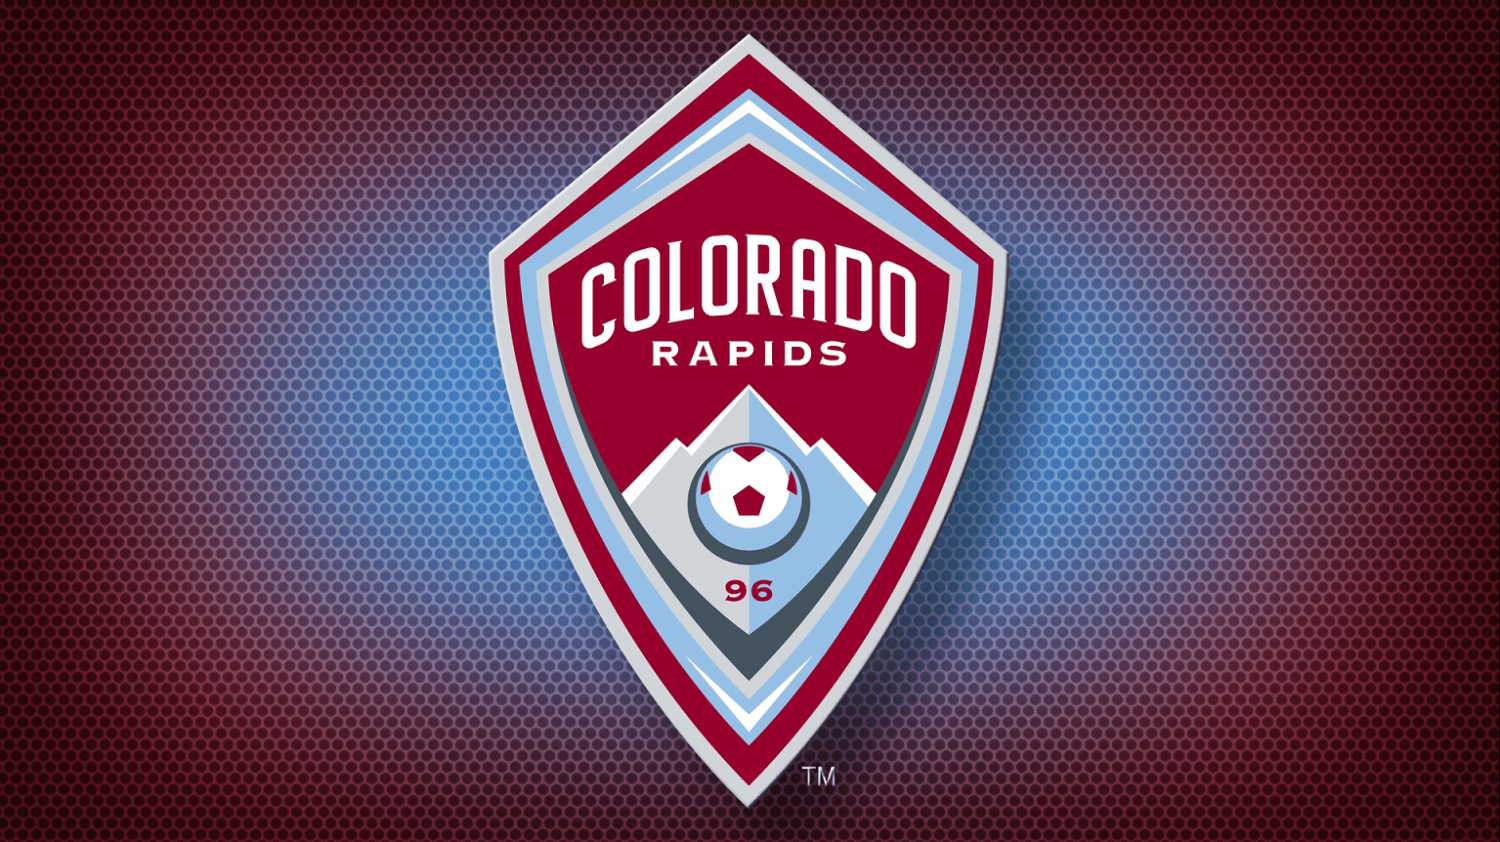 MLS Colorado Rapids Logo wallpaper 2018 in Soccer